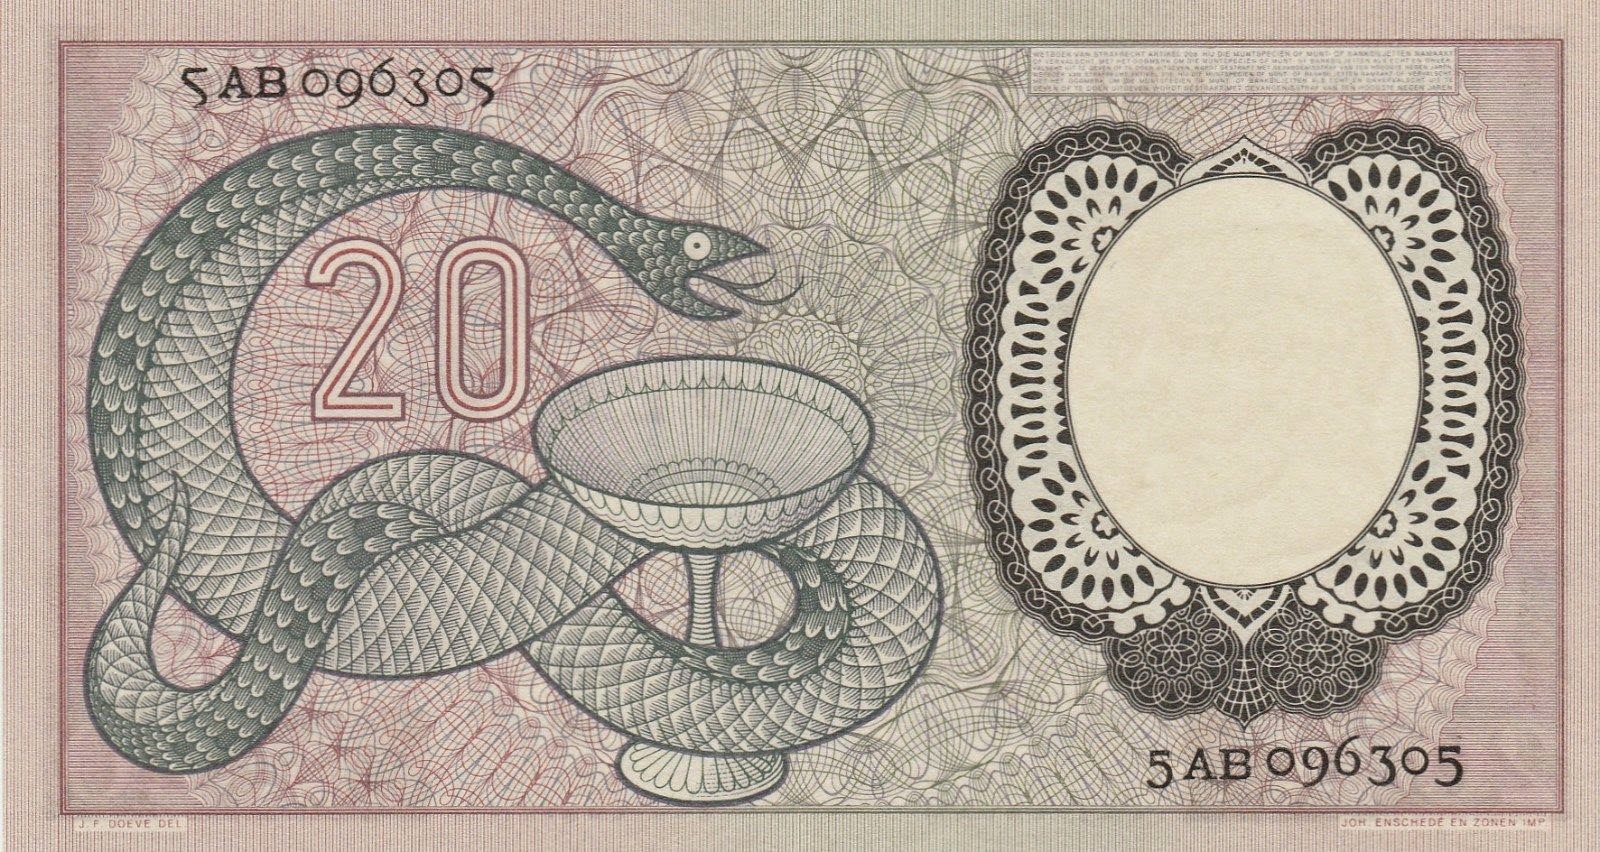 Netherlands Banknotes 20 Gulden Banknote 1955 Bowl of Hygieia